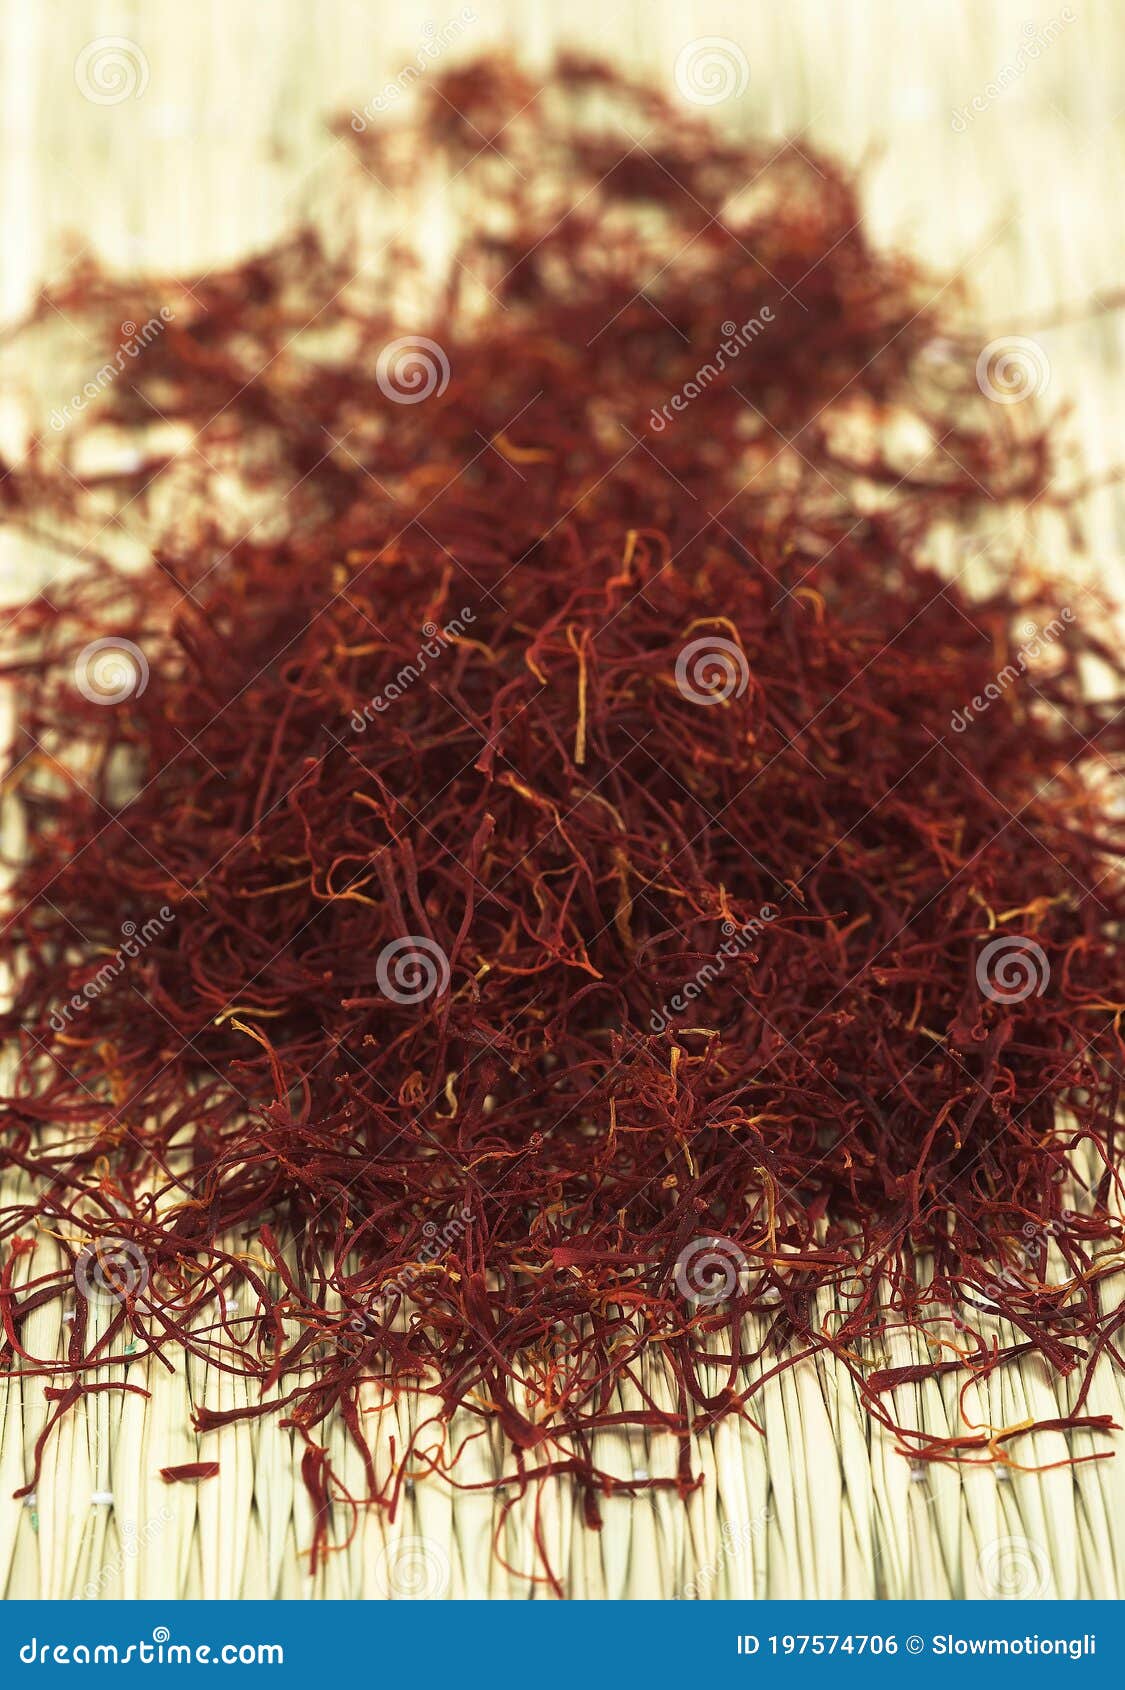 saffron, crocus sativus, spice derived from dried saffron crocus stigmas